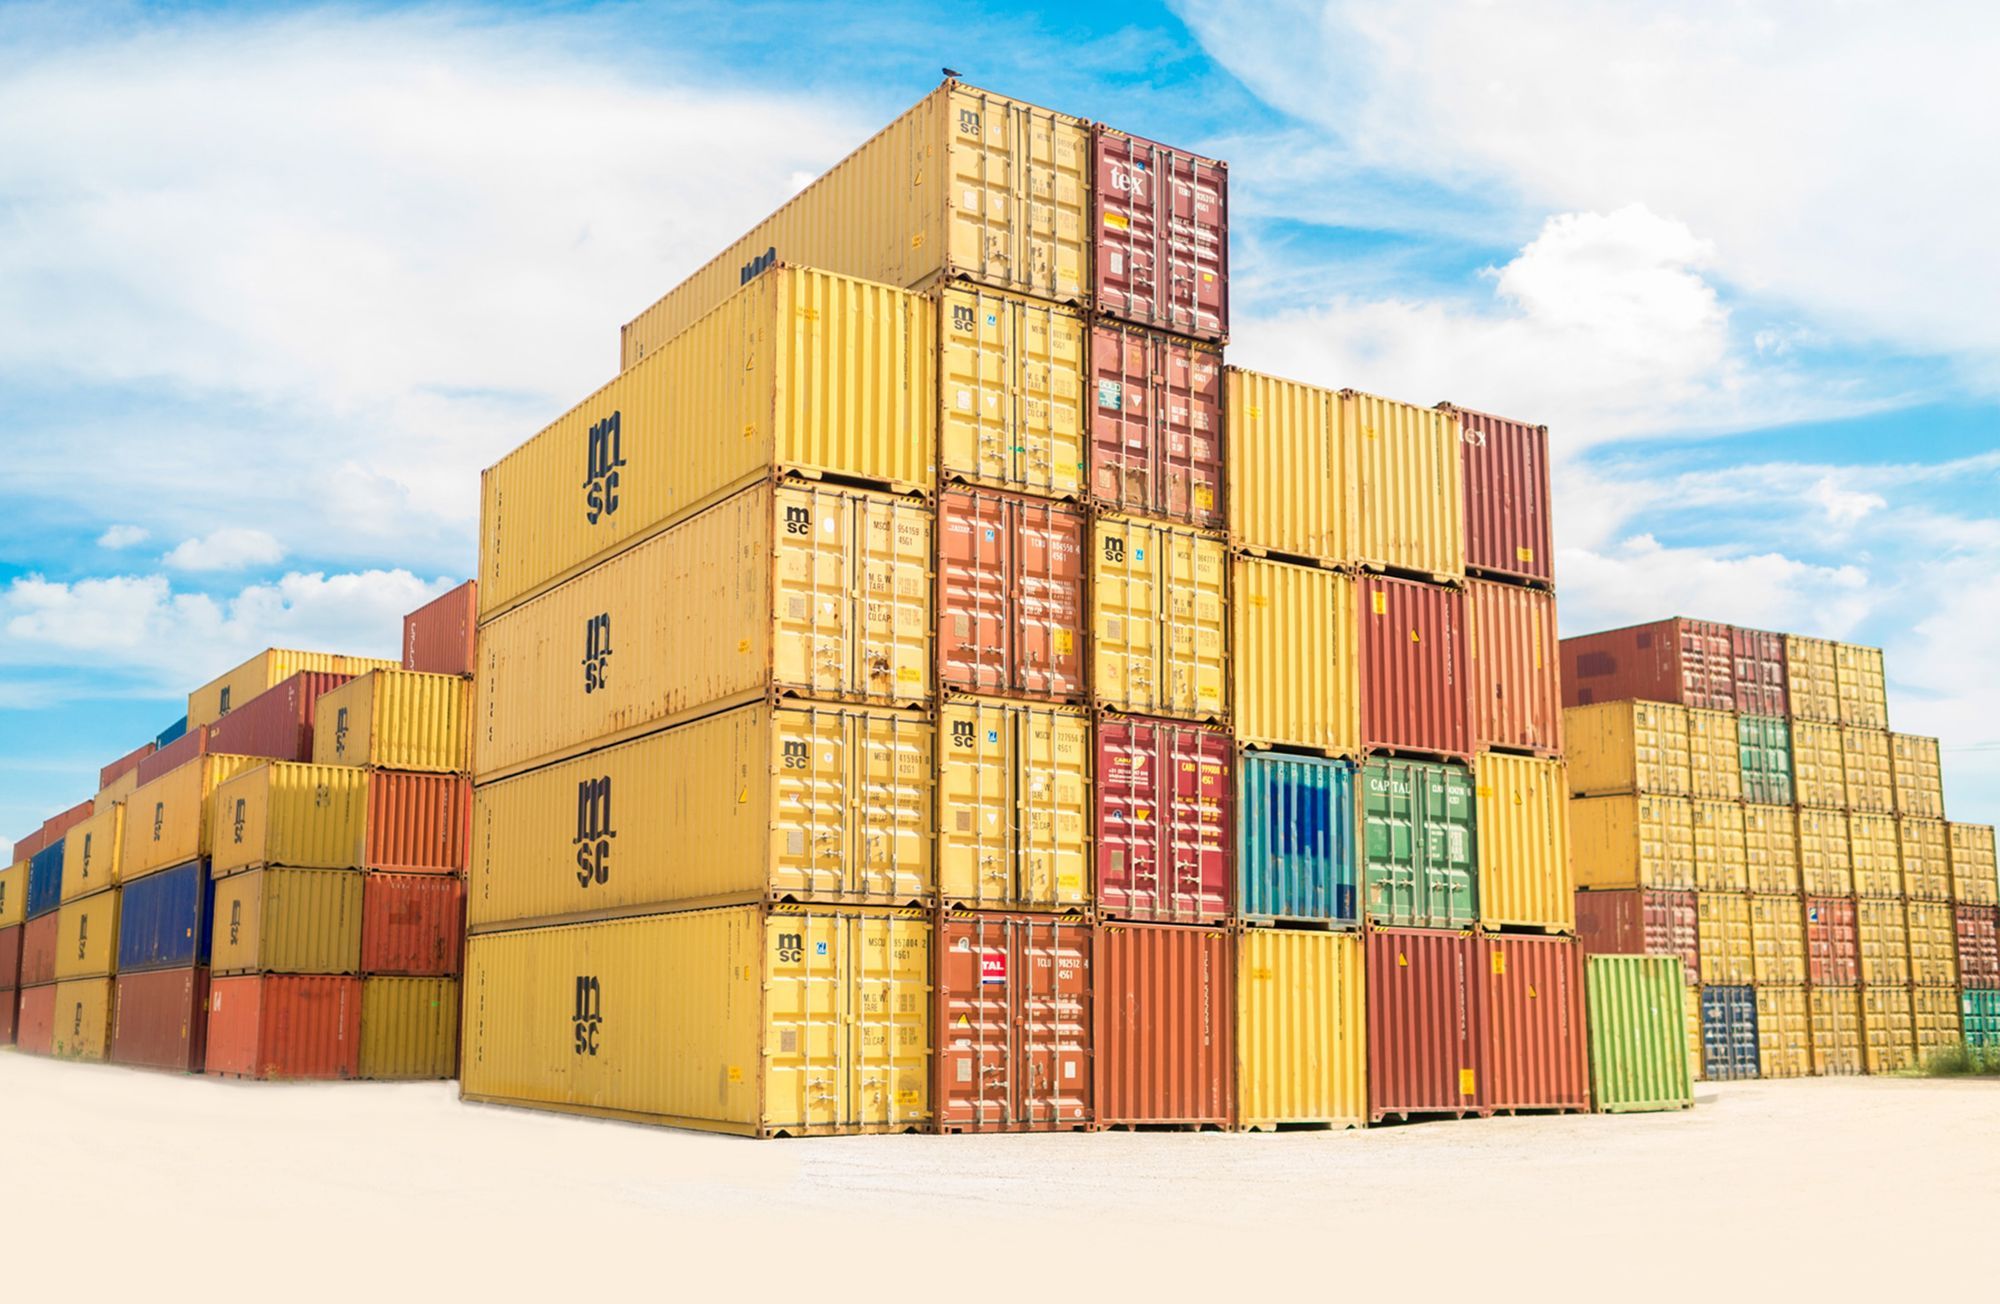 Understanding Container Architecture